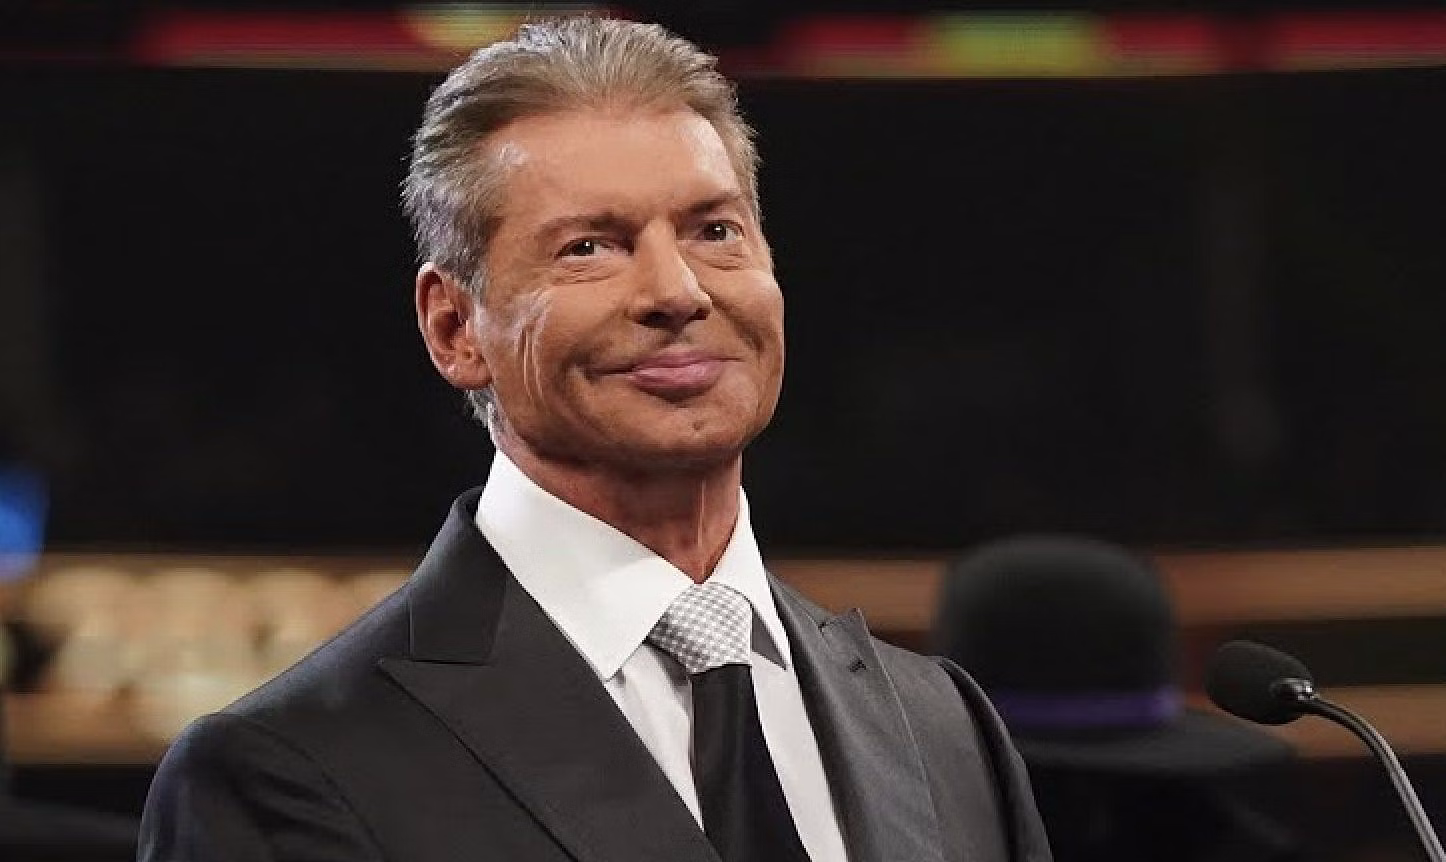 Maven’s Reserved Stance on Allegations Regarding Vince McMahon